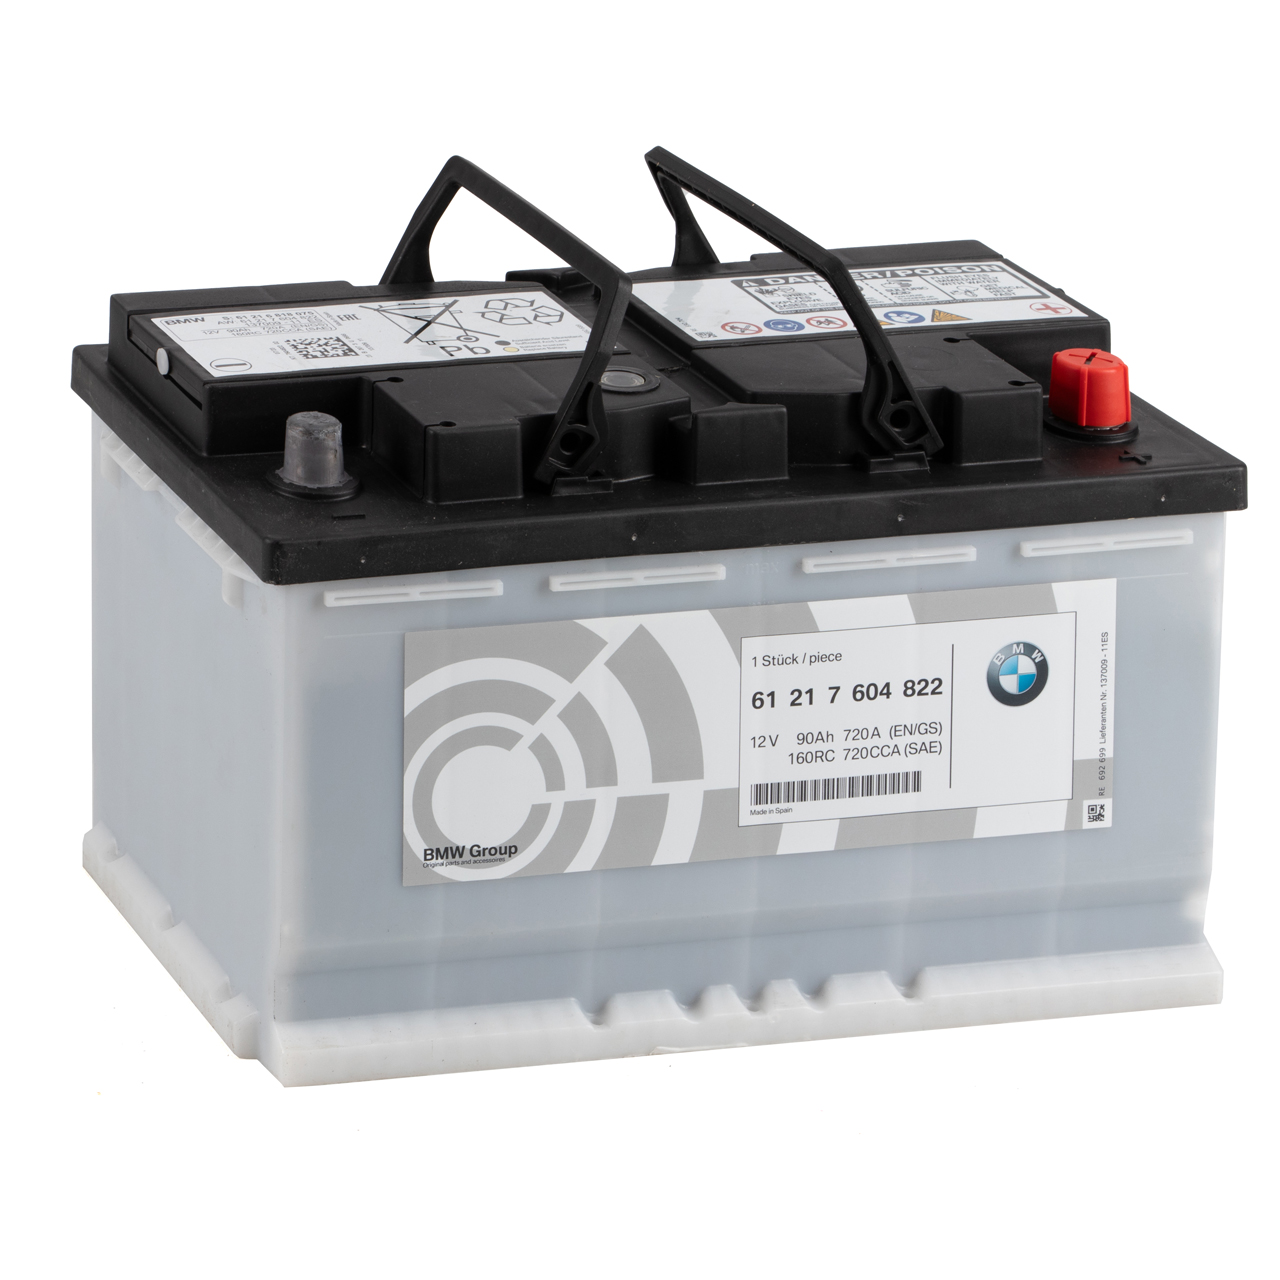 ORIGINAL BMW Autobatterie Batterie Starterbatterie 12V 90Ah 720A